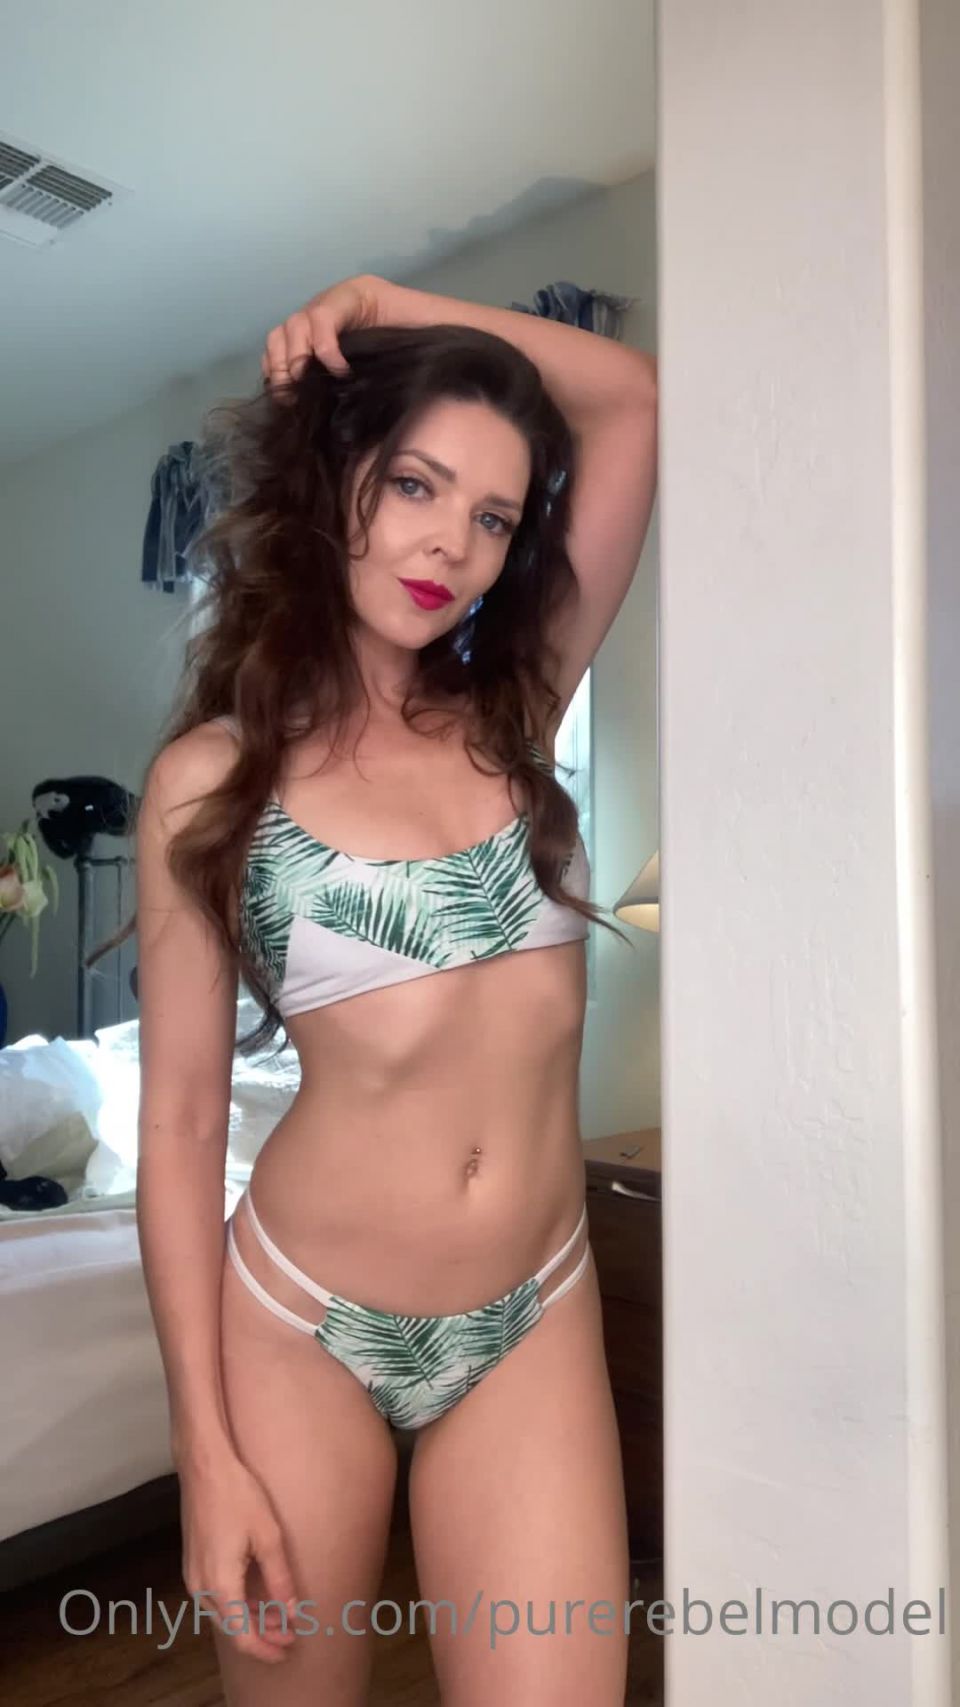 KristyJessica () Kristyjessica - stripping out of my pretty bikini 20-03-2021